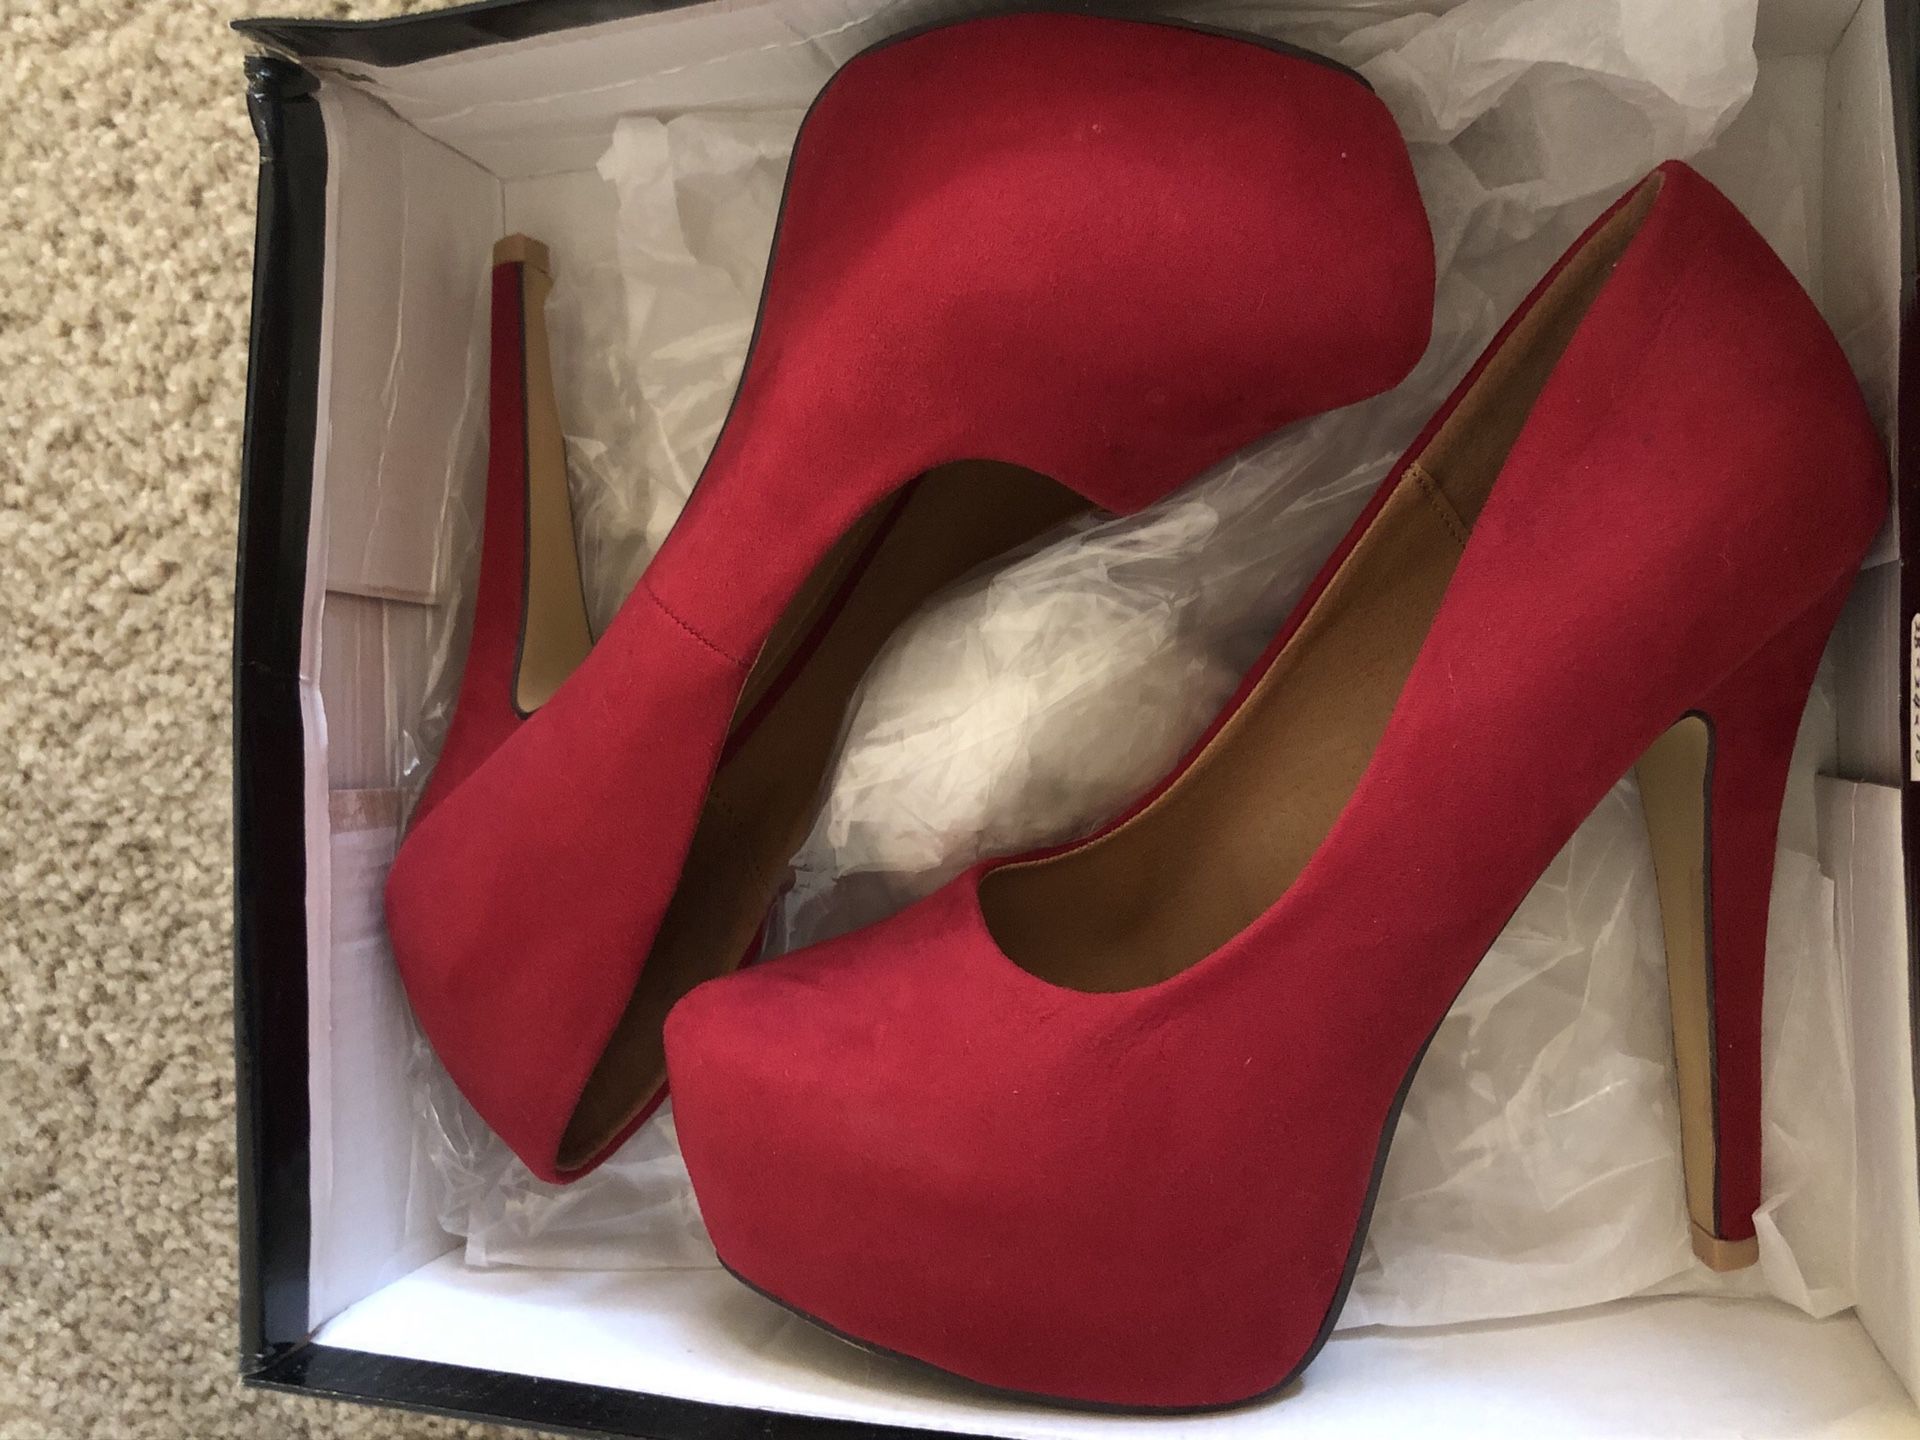 Brand new red heels